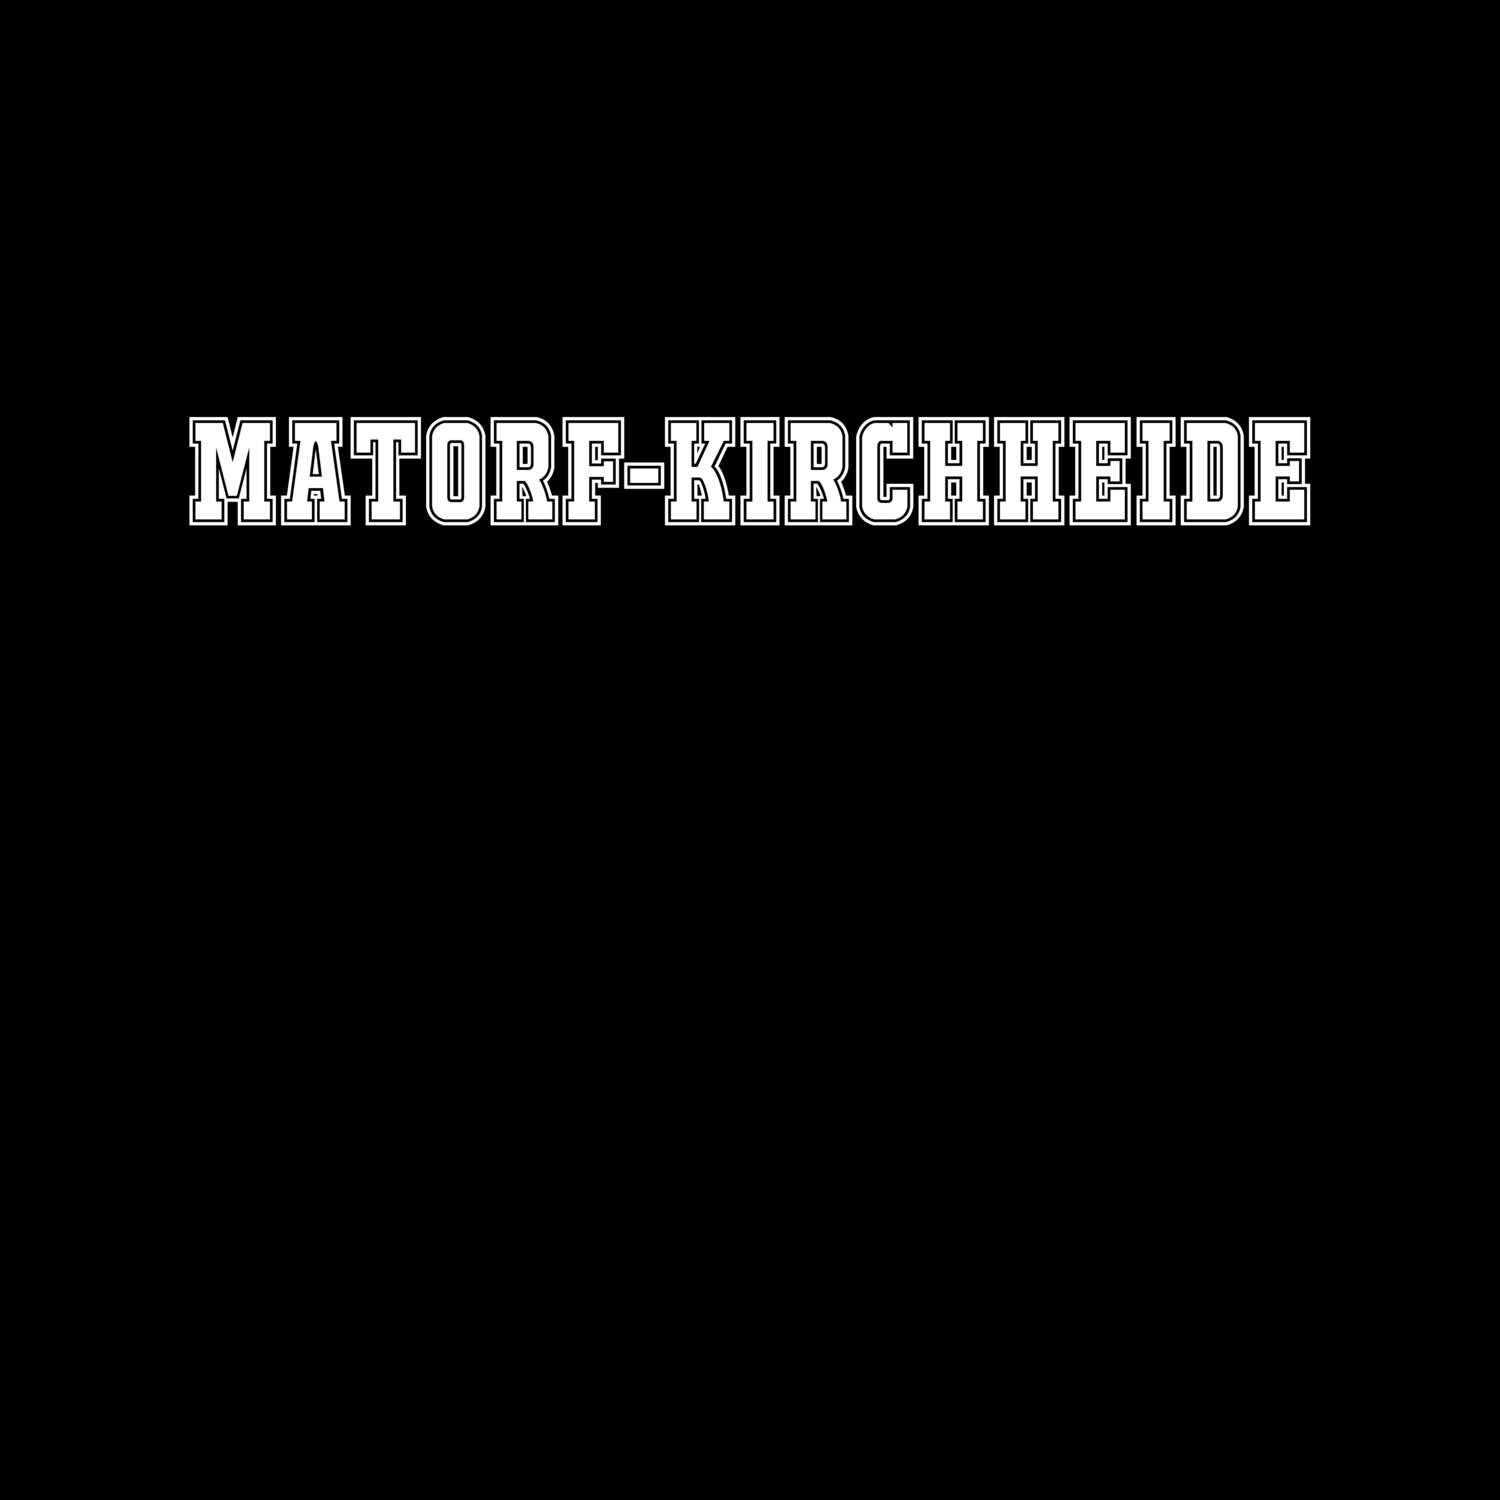 Matorf-Kirchheide T-Shirt »Classic«